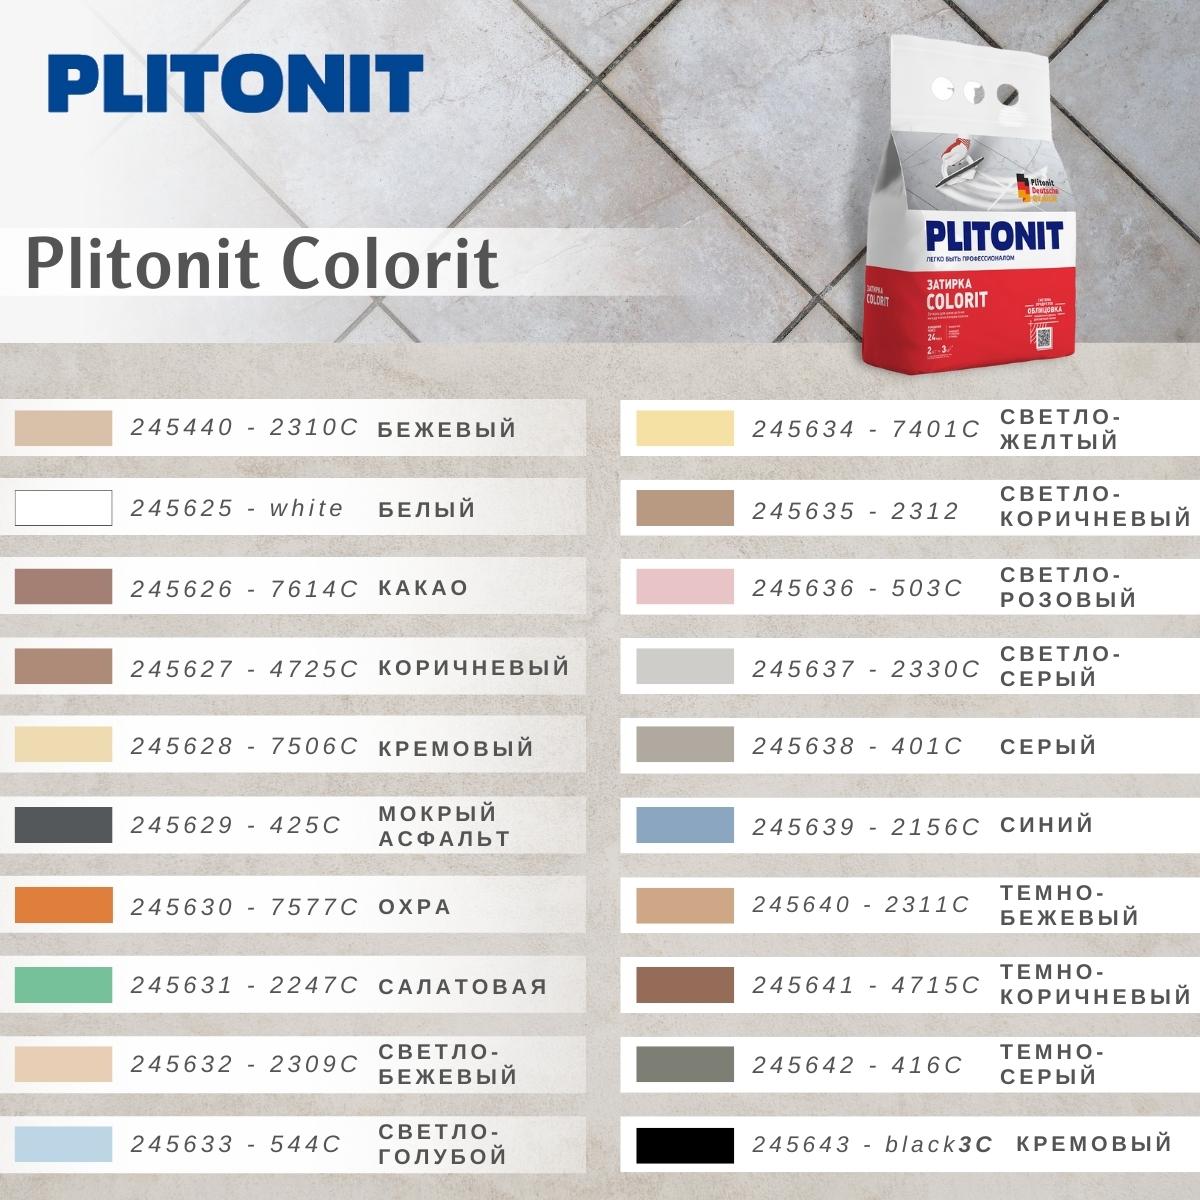 Затирка "colorit" серая 2 кг (1/8) "plitonit"